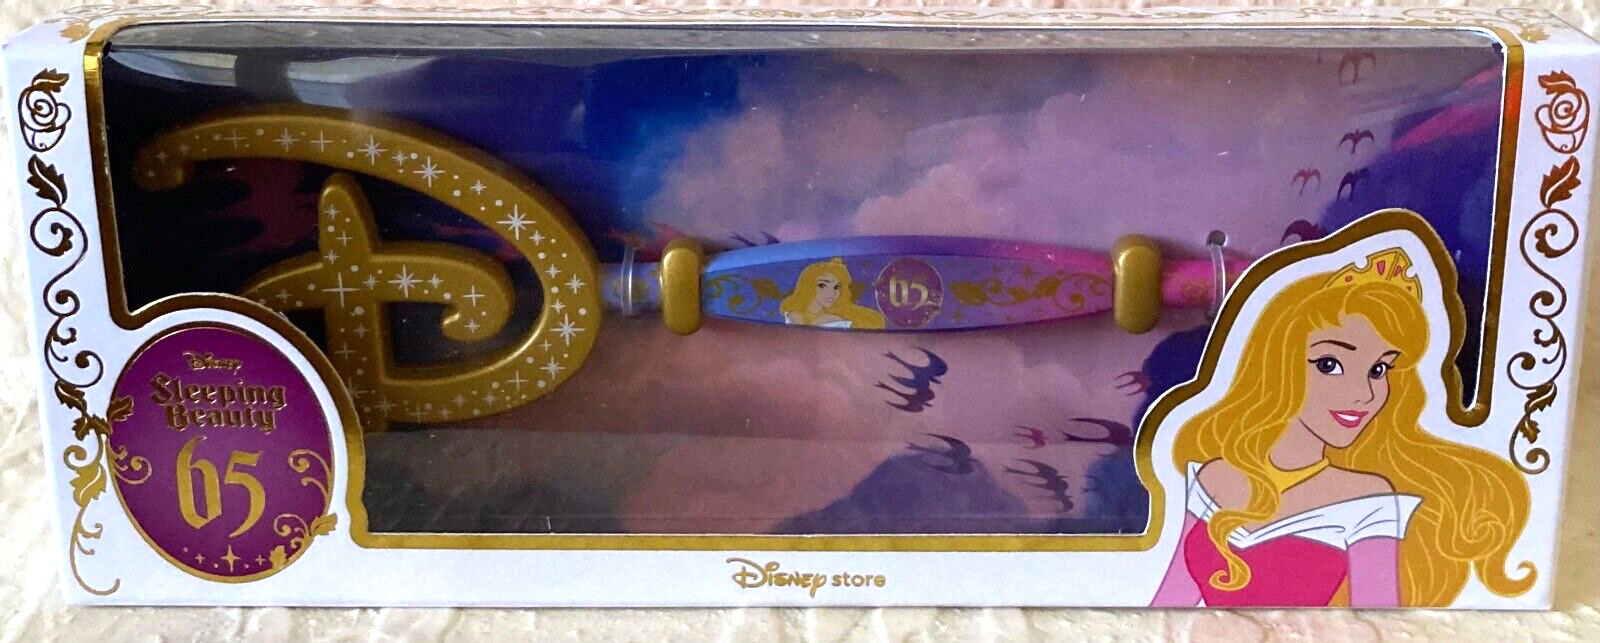 NIB Disney Sleeping Beauty 65th Anniversary Collectible Key Princess Aurora